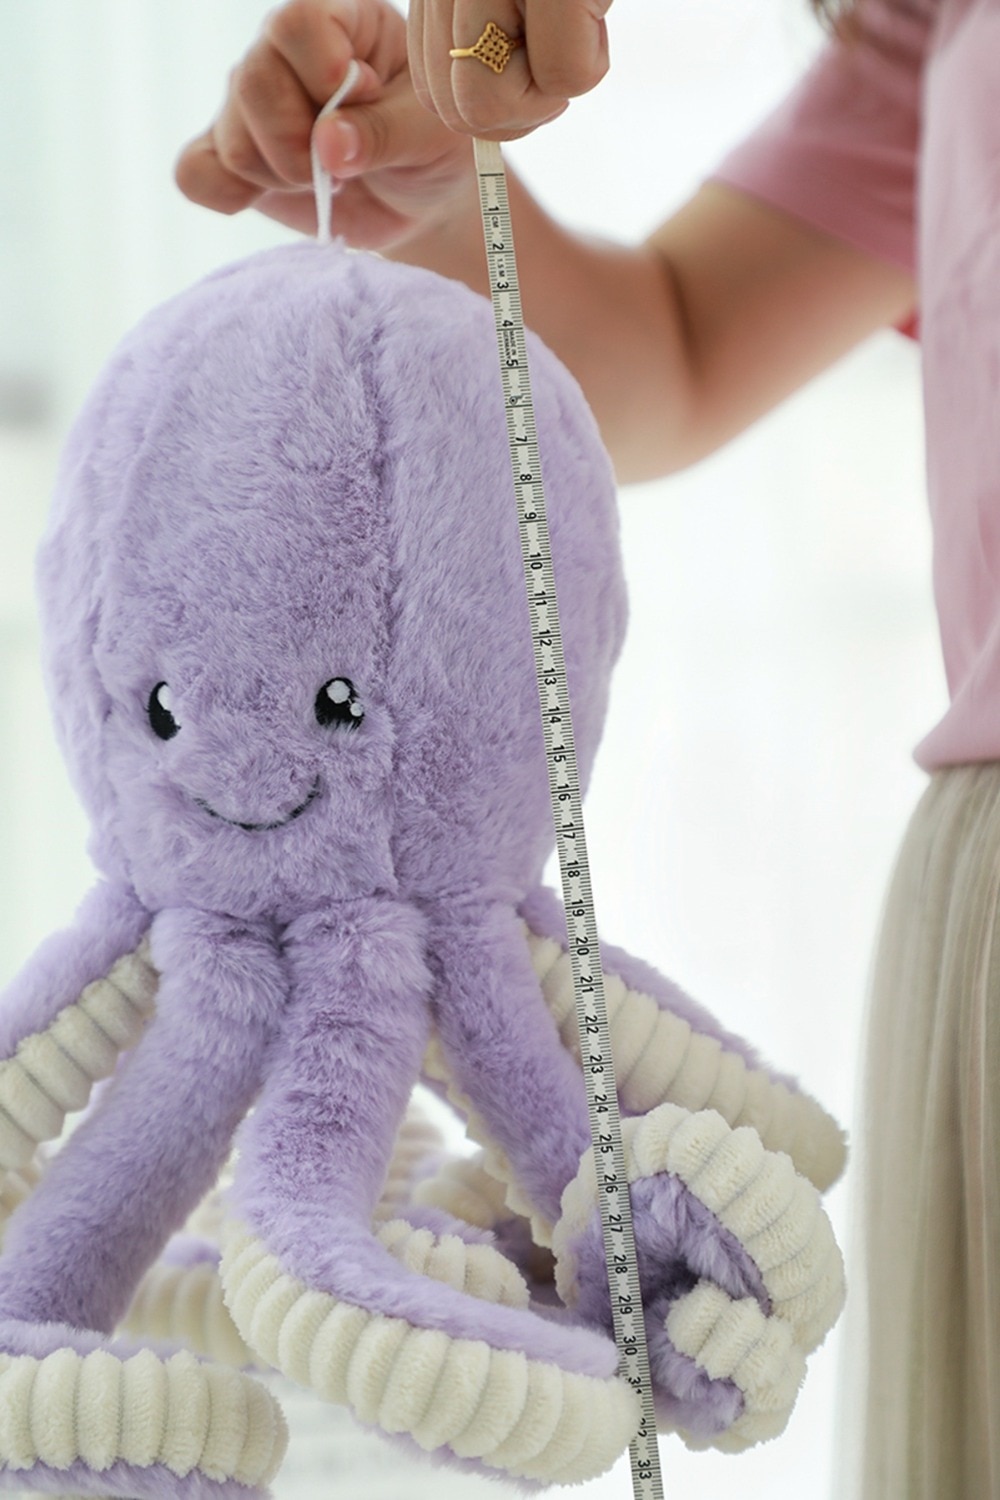 Customized Size Octopus Stuffed Plush Toys For Baby Kids Birthday Christmas Children Kid Gifts Cute Tako Dolls